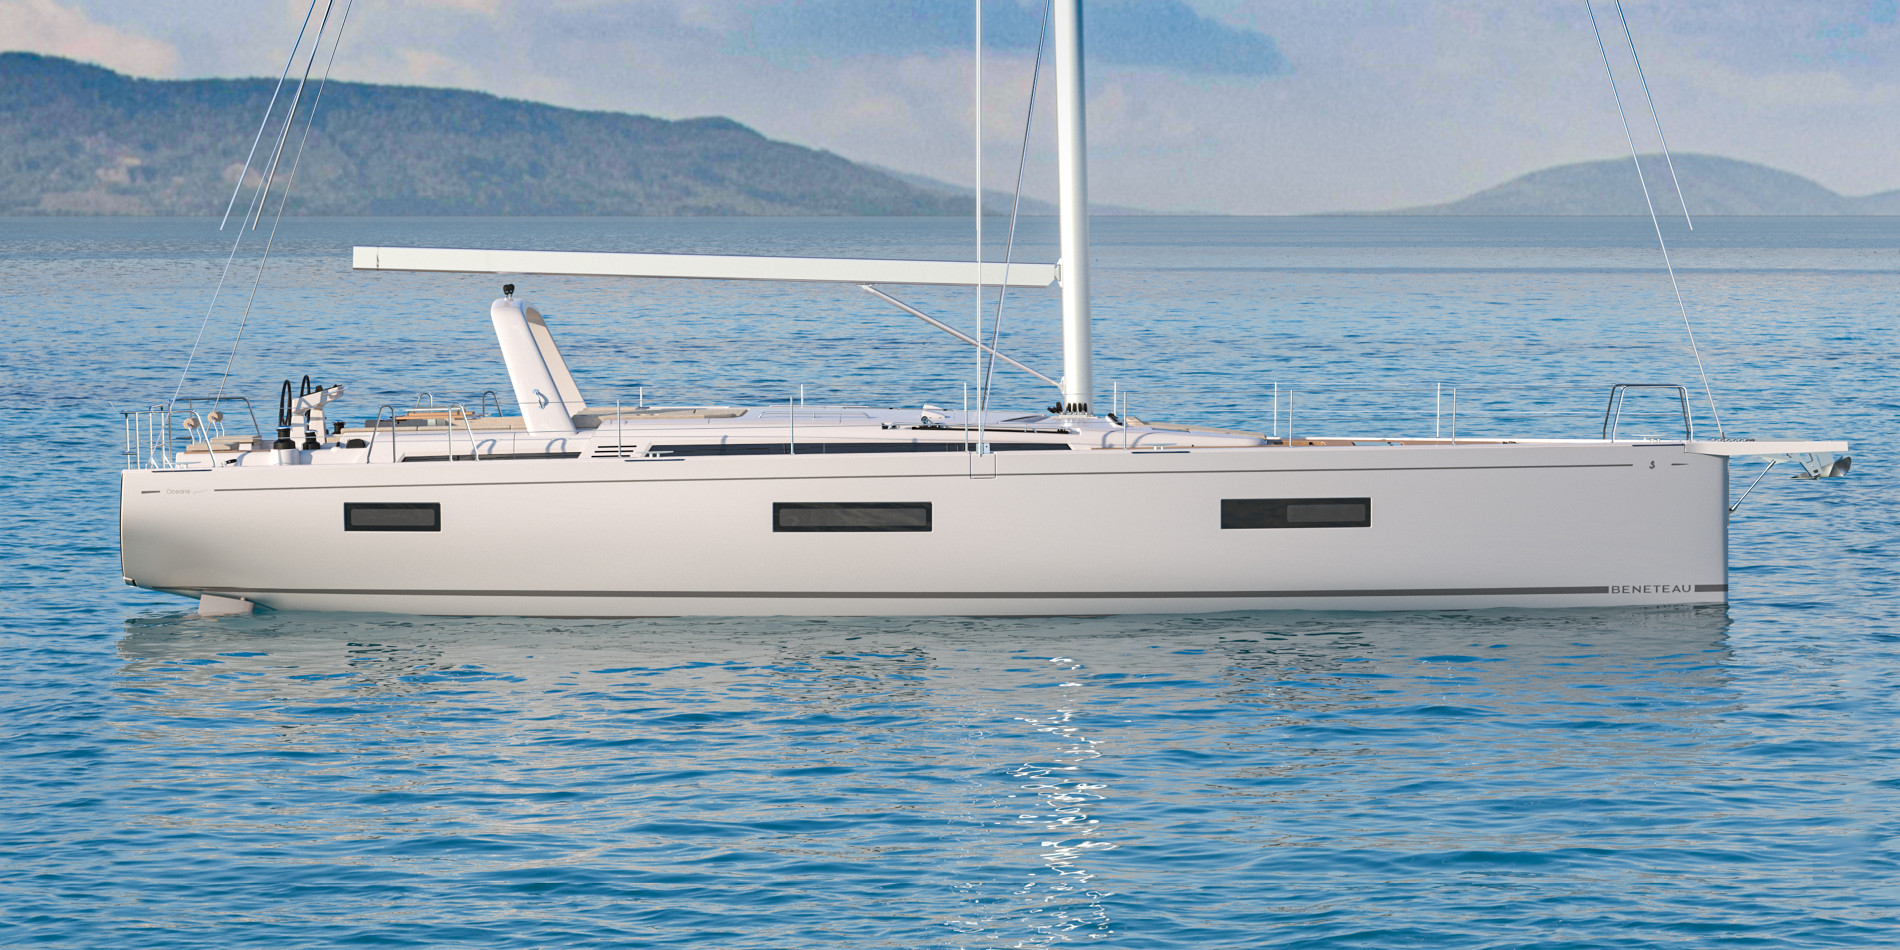 Oceanis yacht 60